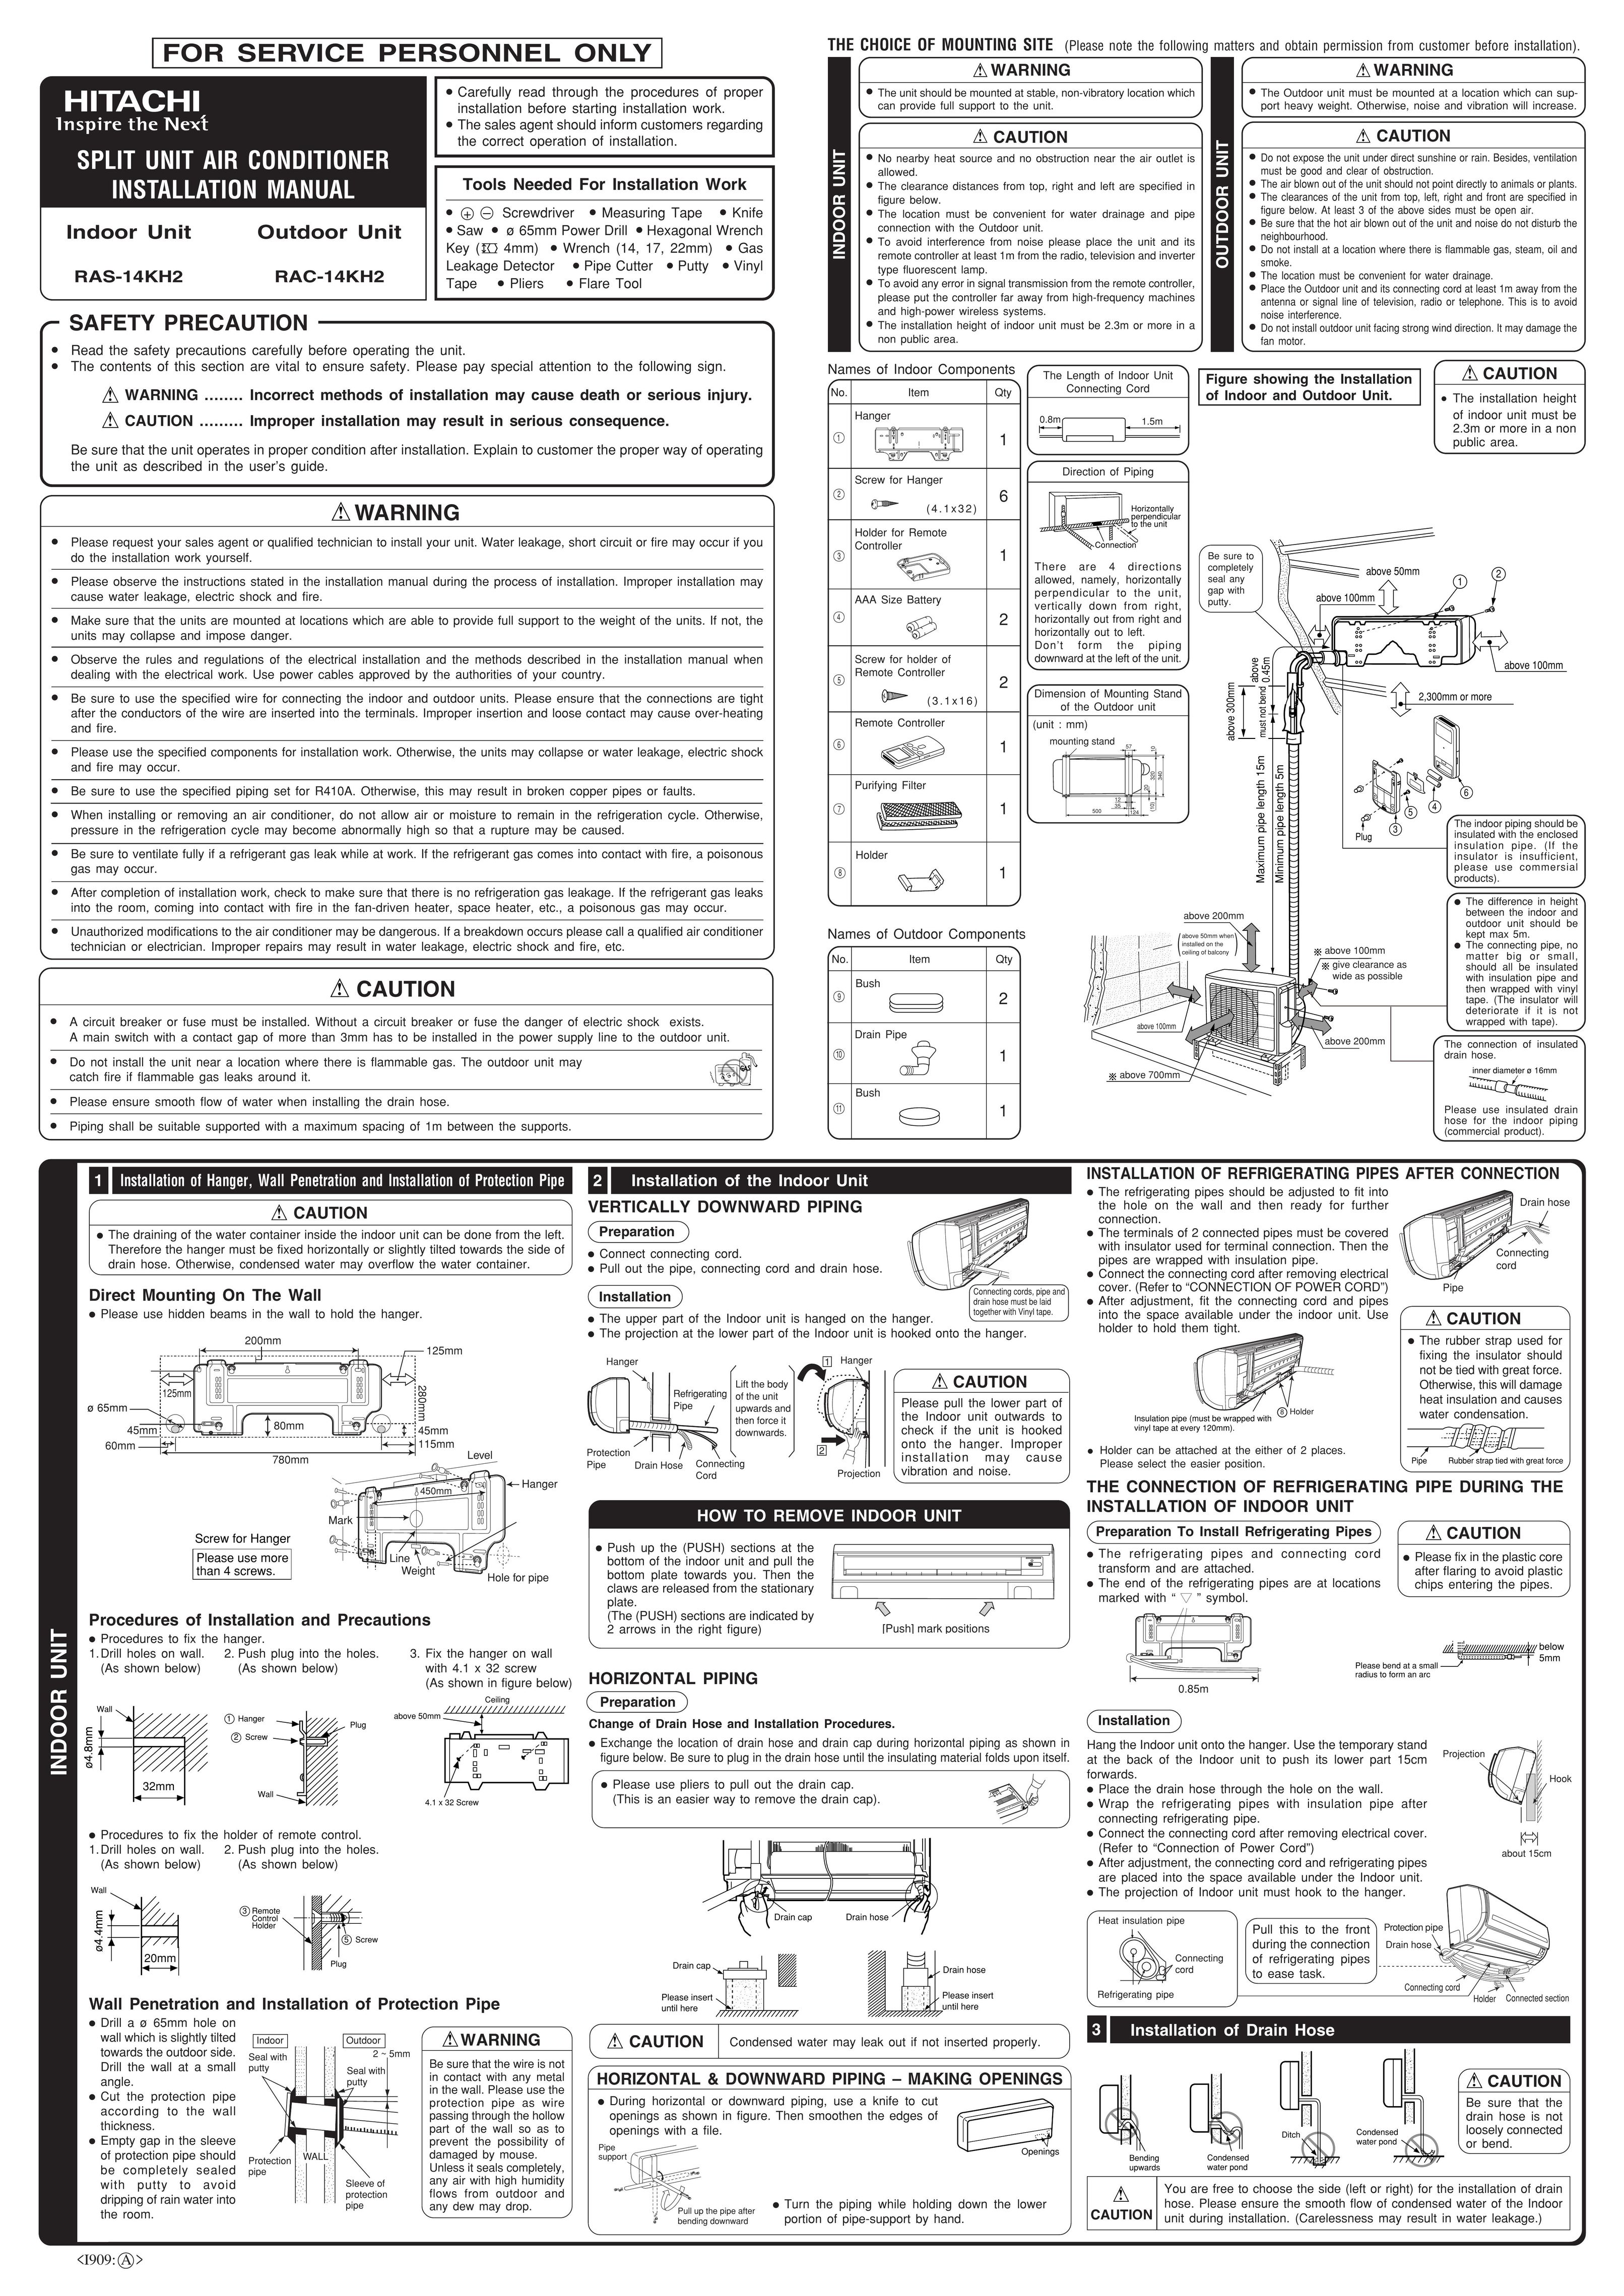 Hitachi RAC-14KH2 Air Conditioner User Manual